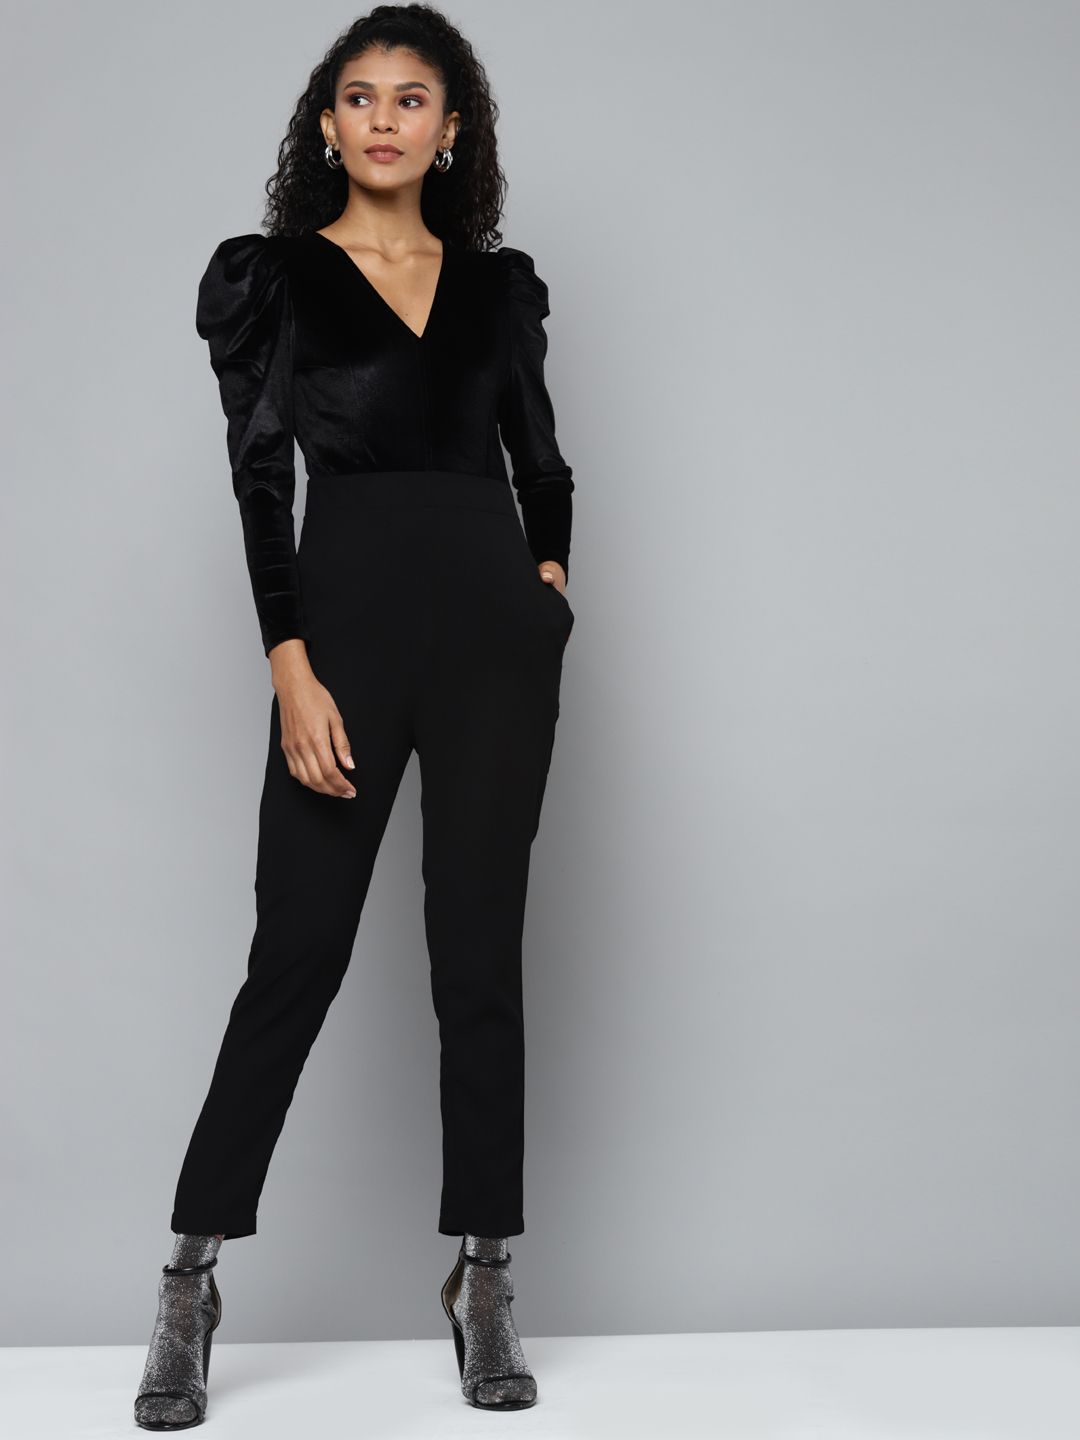 SASSAFRAS Black Velvet Tailor Fit Jumpsuit Price in India